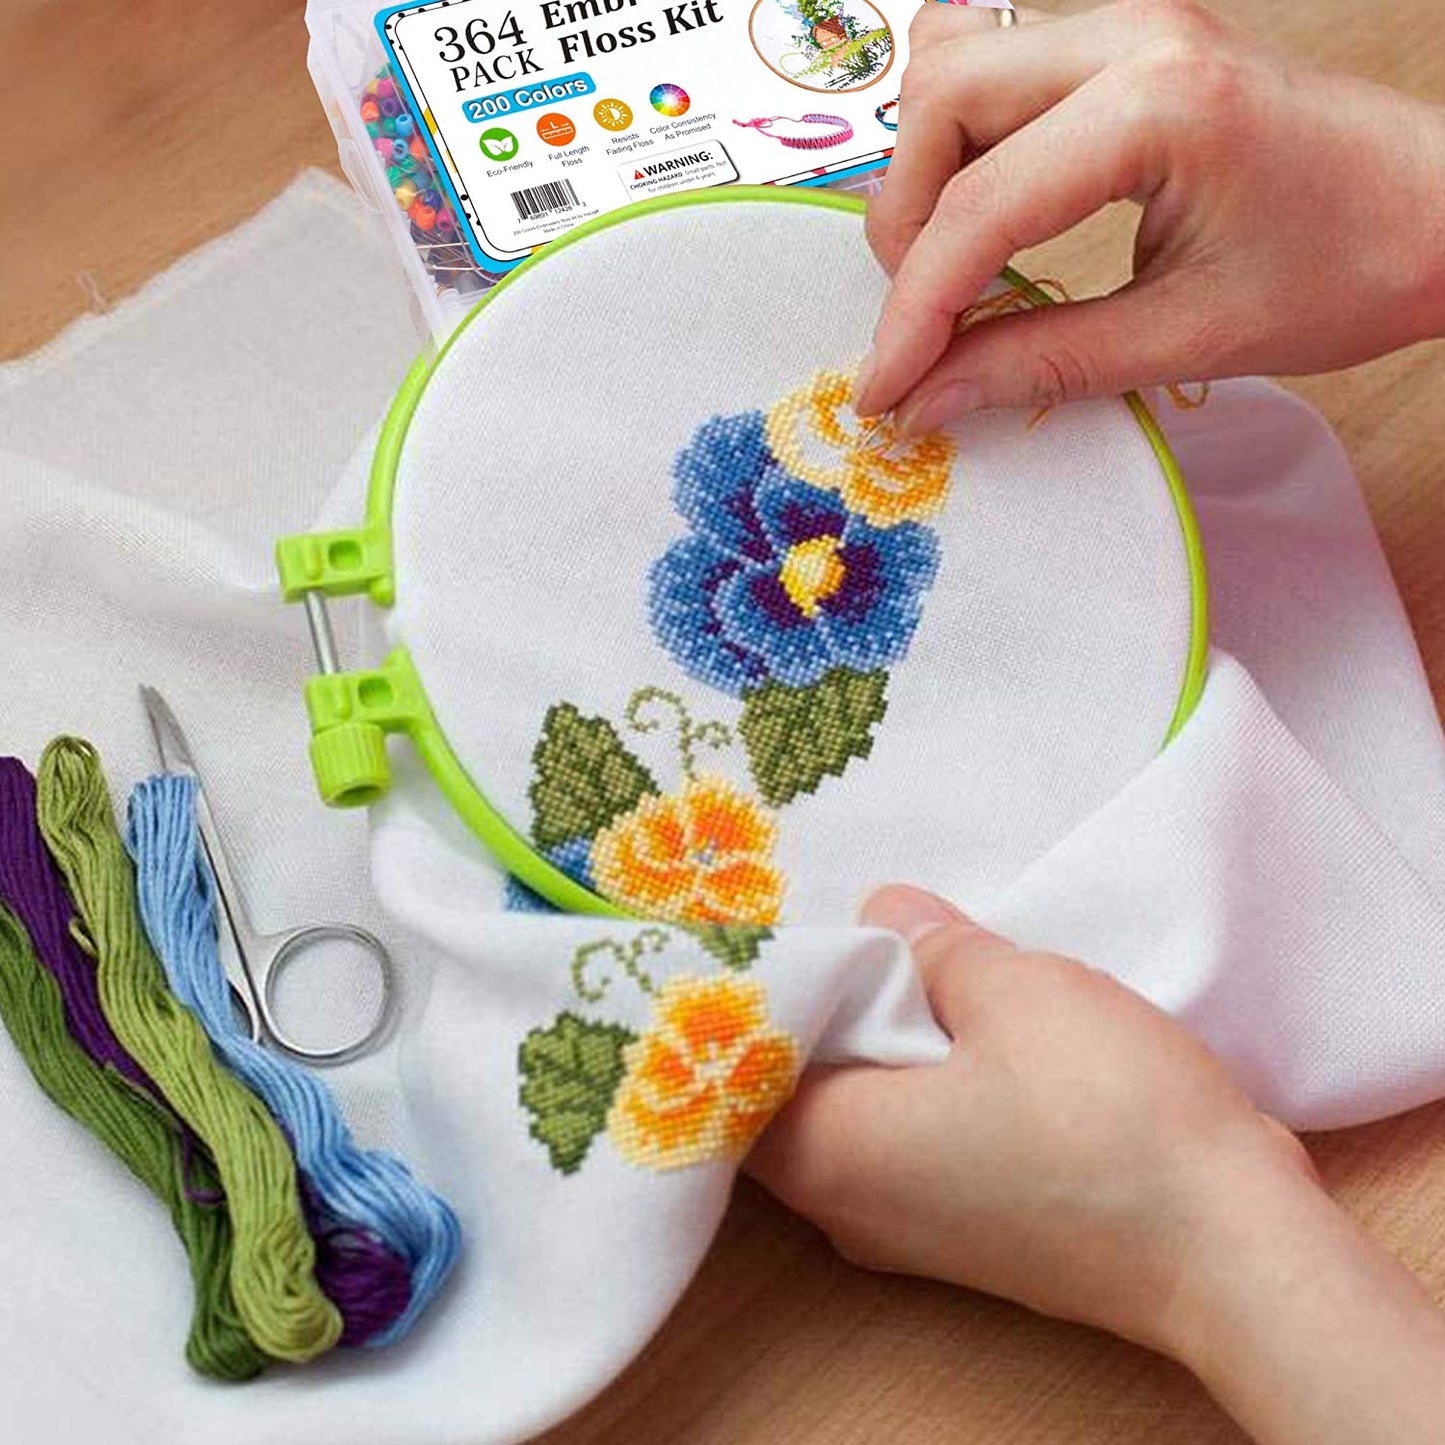 Embroidery Floss Kit, 364 Pack Embroidery Cross Stitch Kit with 200 Colors Friendship Bracelets Floss and Cross Stitch Tools for Embroidery and Friendship Bracelet String Make